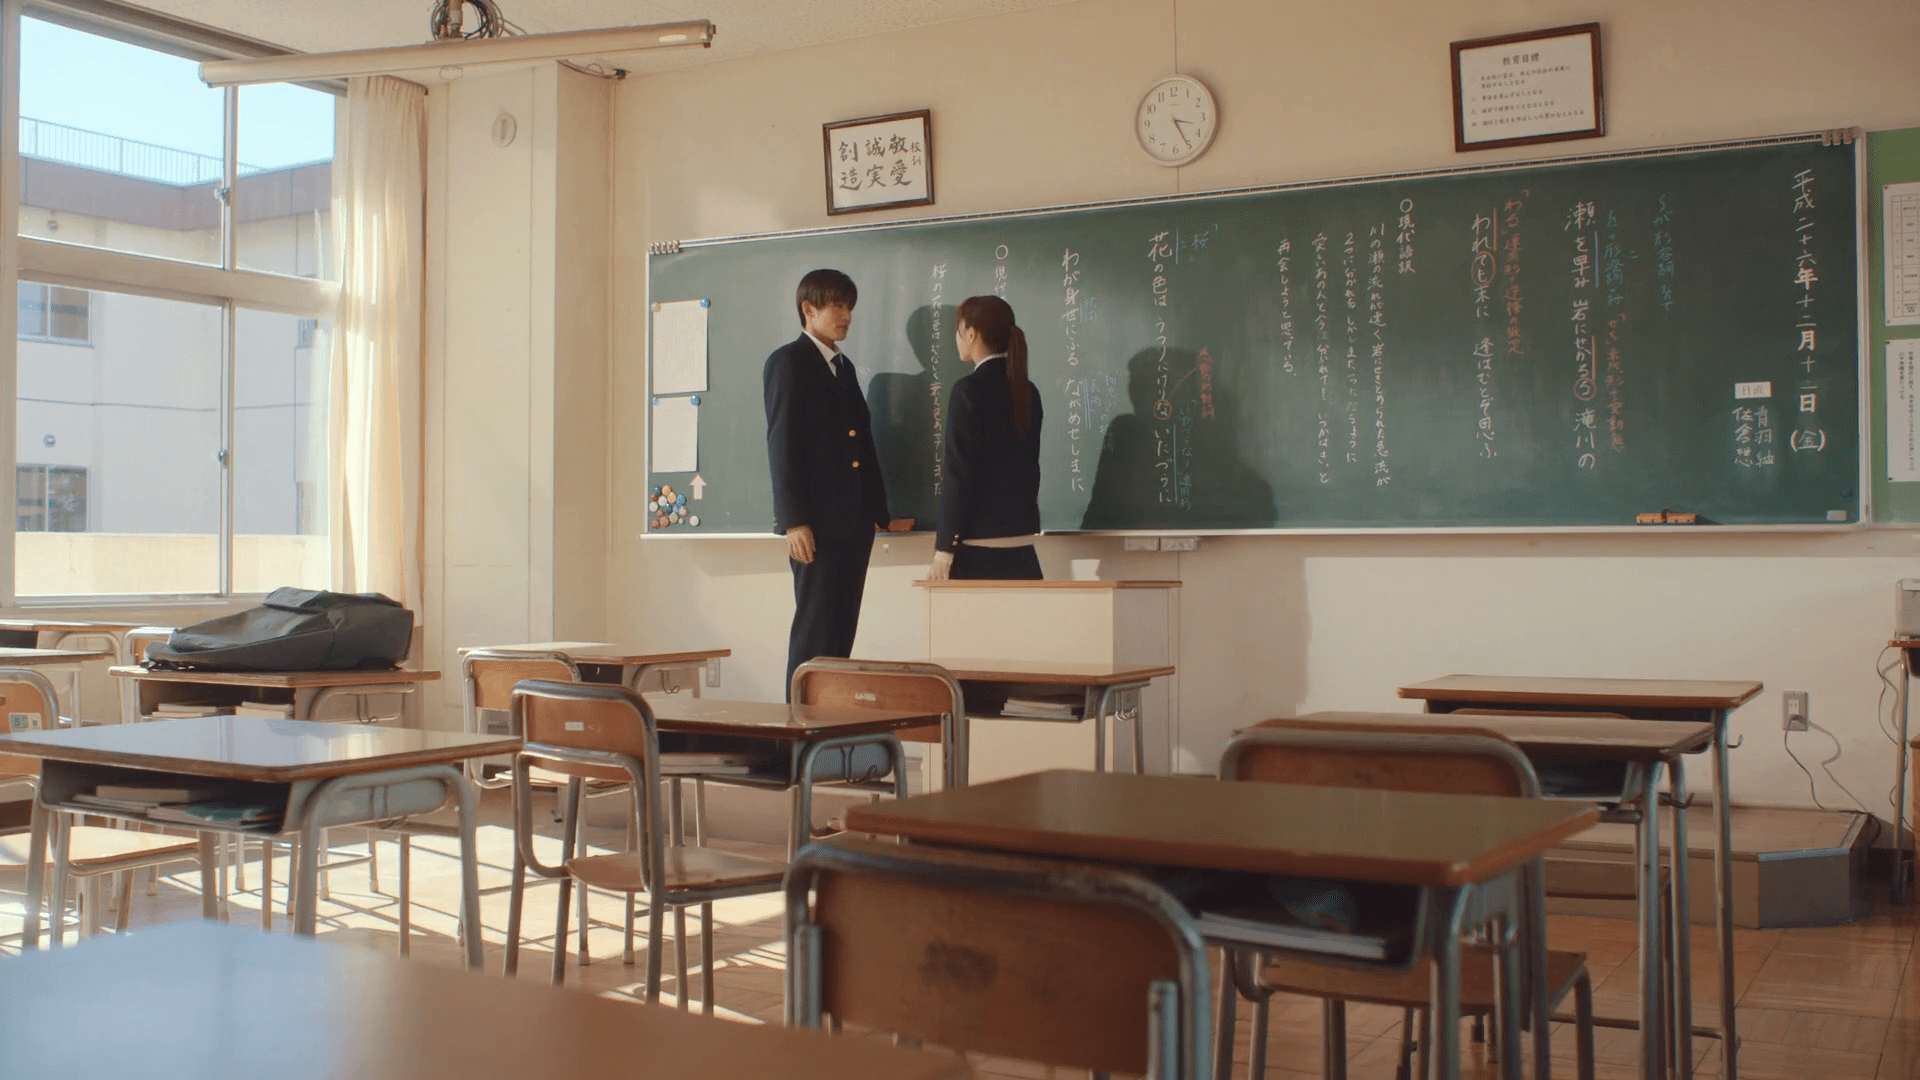 Kawaguchi Haruna as Aoba Tsumugi and Meguro Ren as Sakura Sou in episode 11 of jdrama Silent